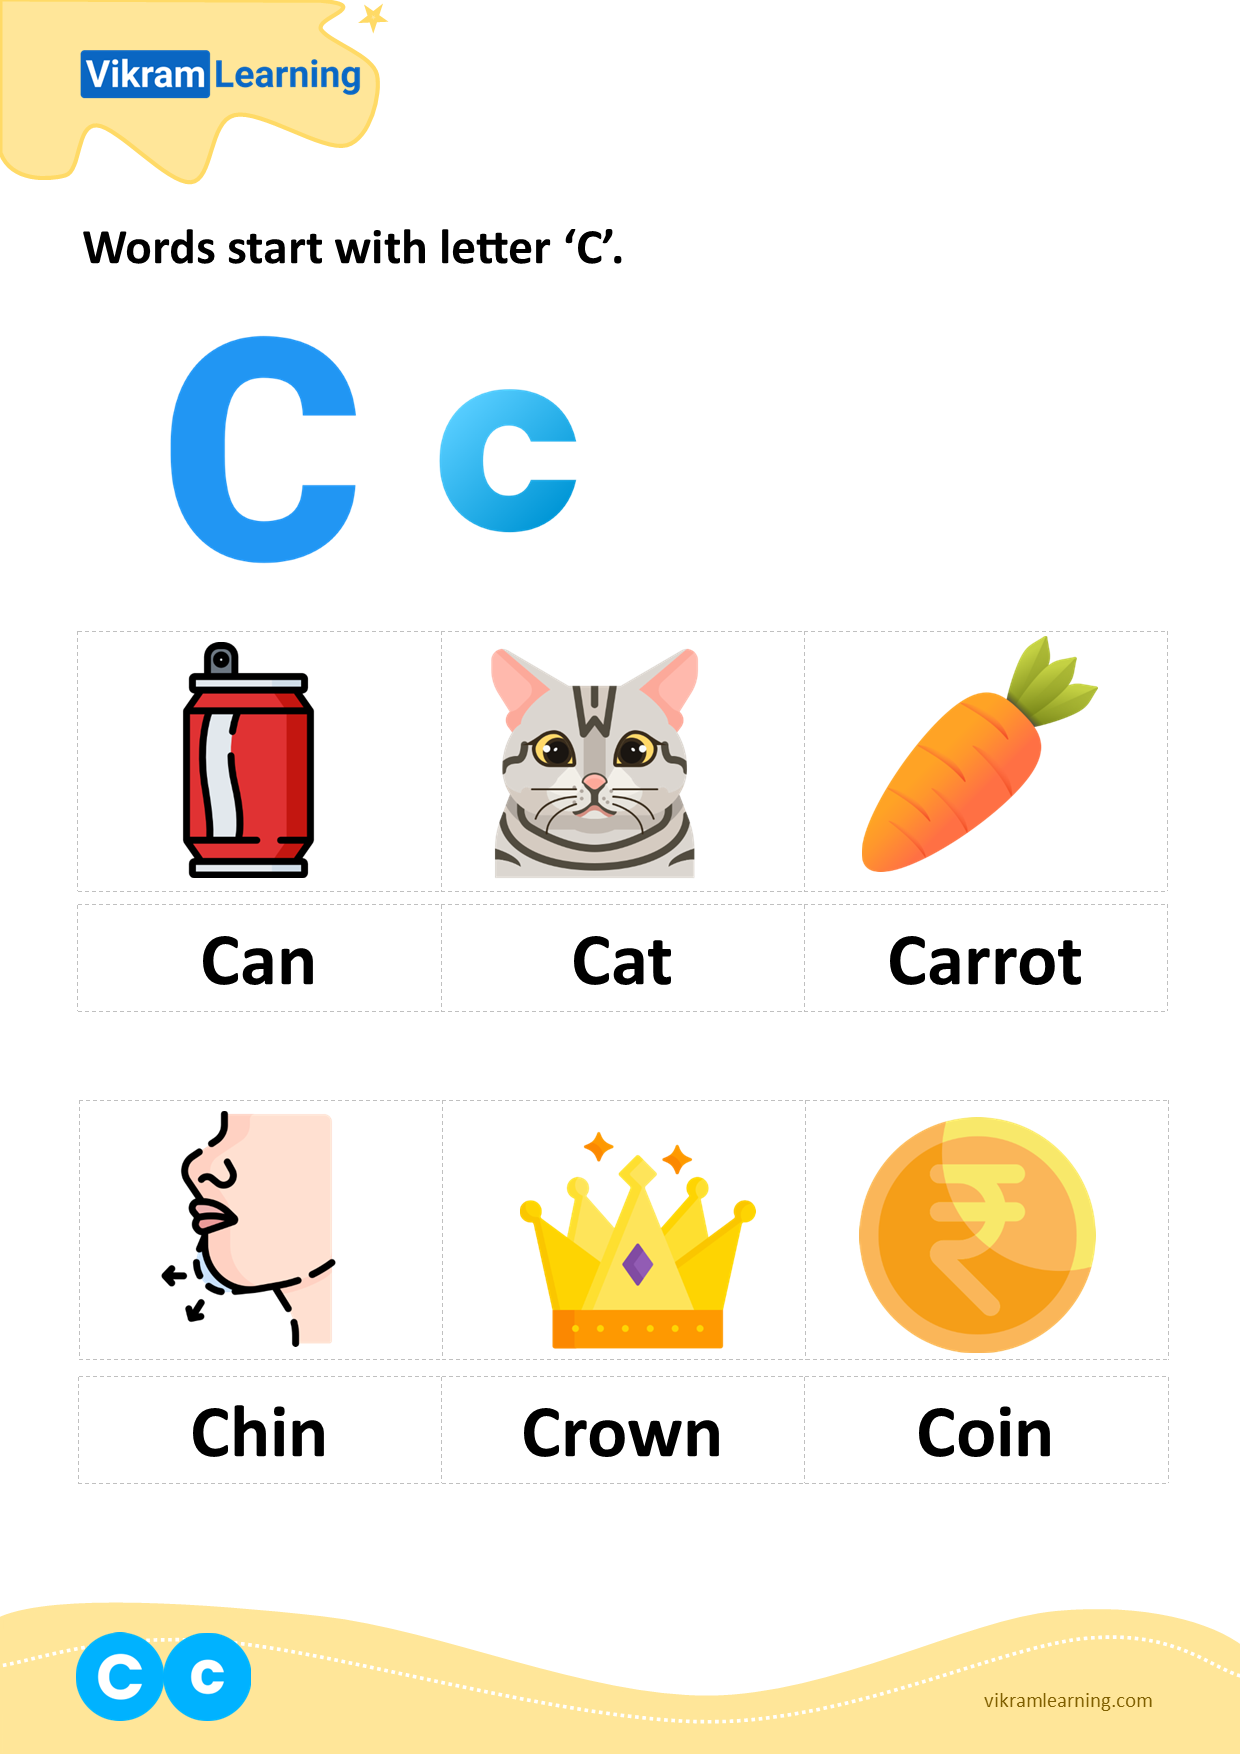 Download words start with letter 'c' worksheets